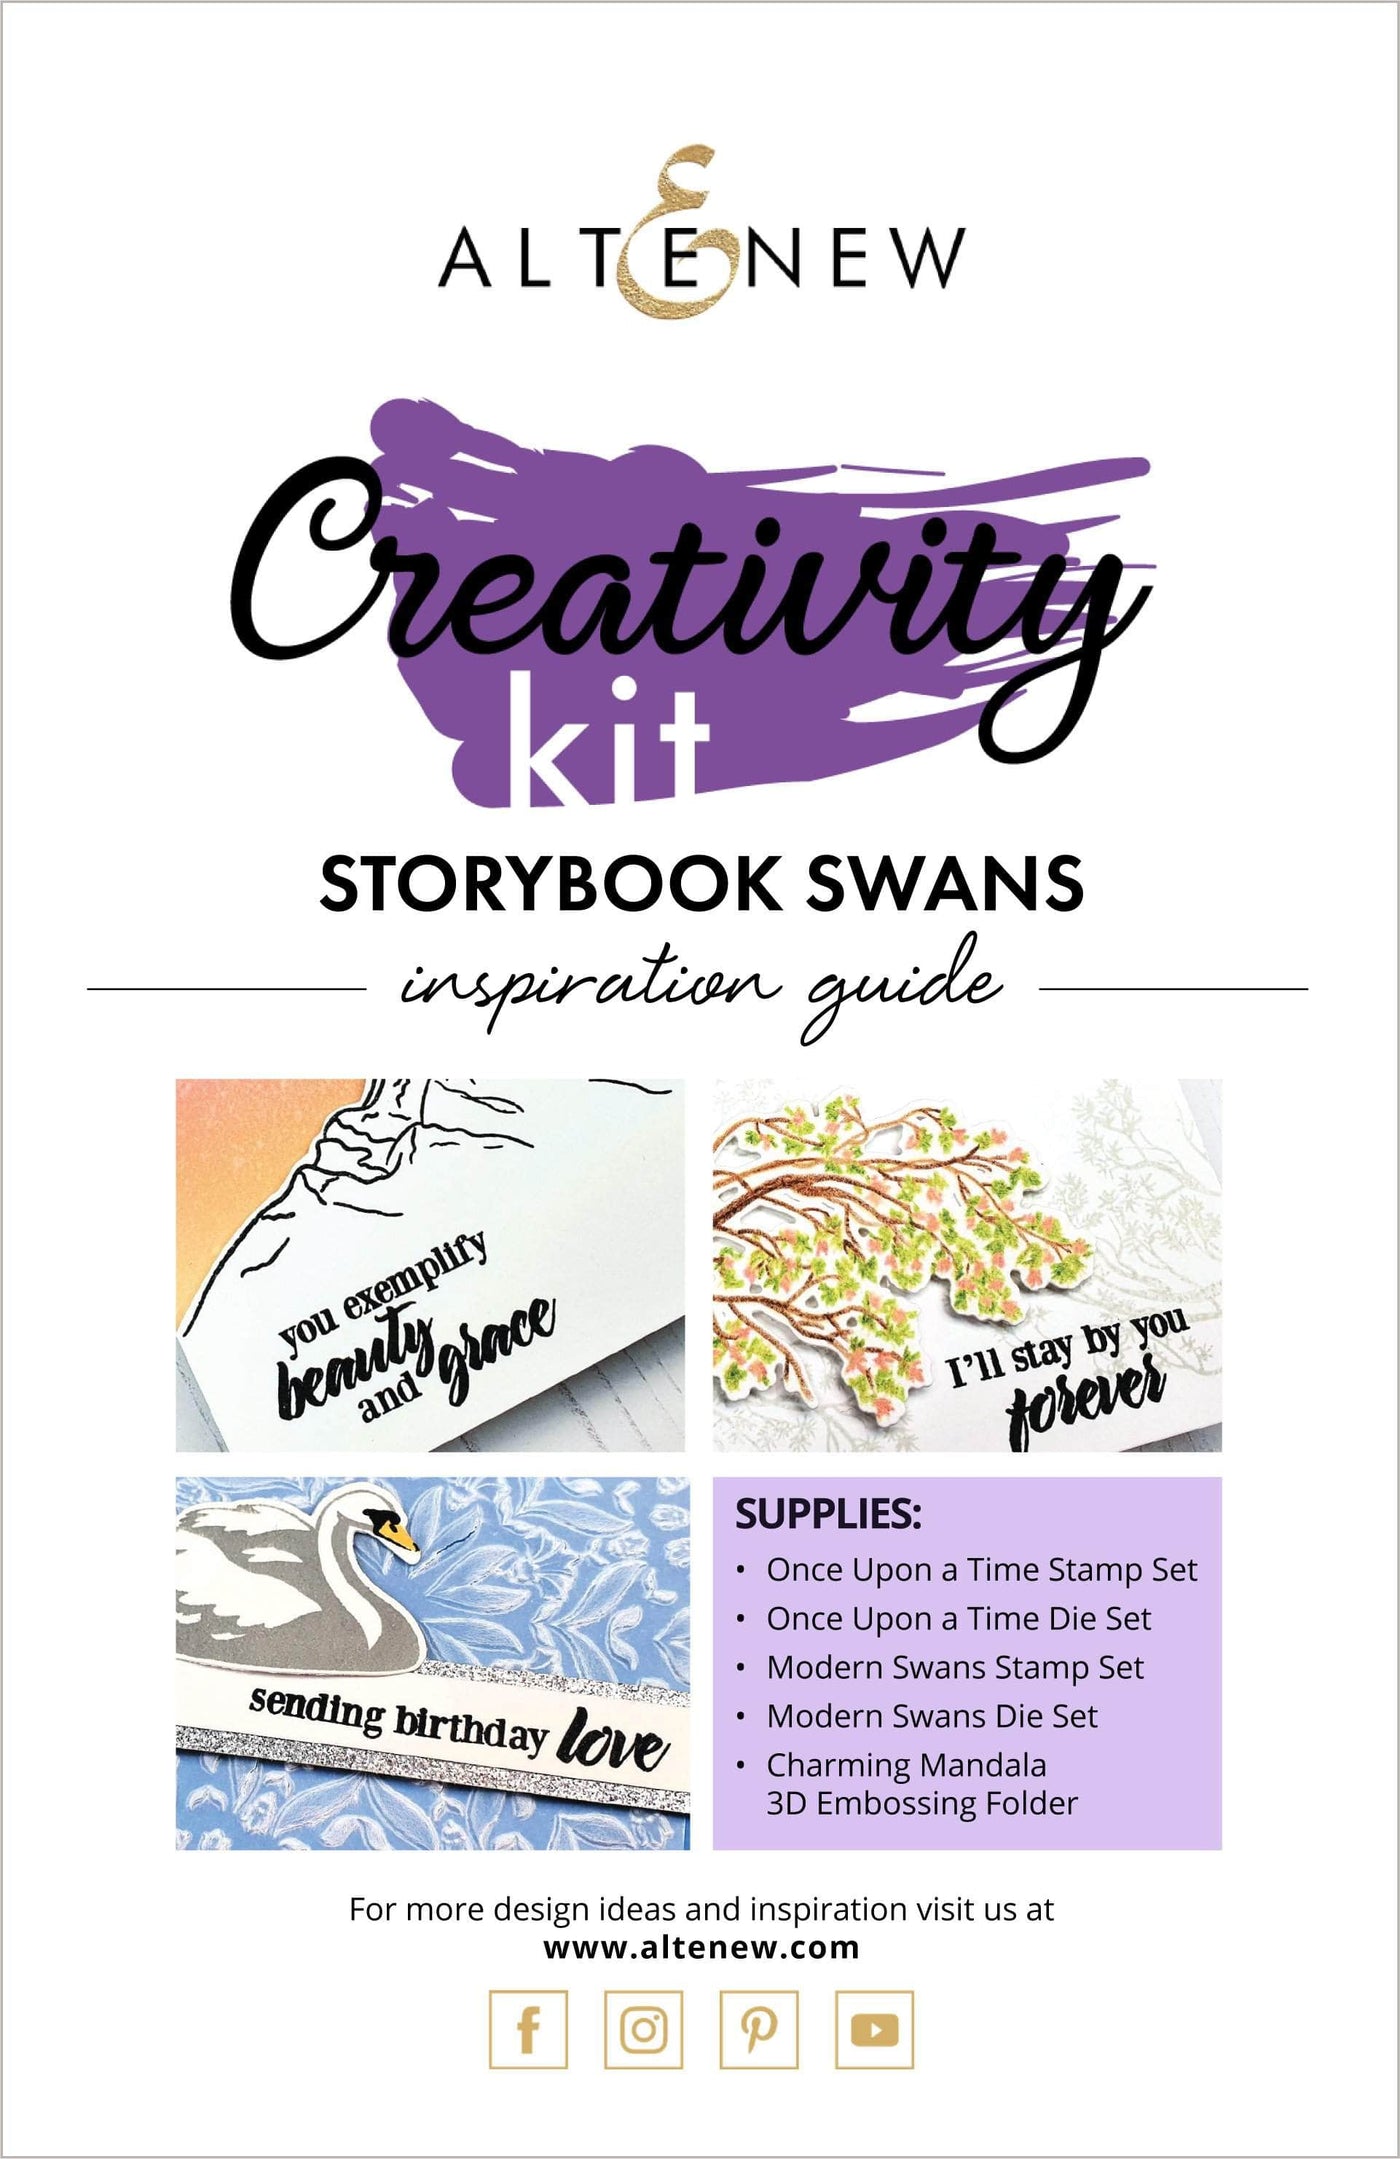 Printed Media Storybook Swans Creativity Cardmaking Kit Inspiration Guide